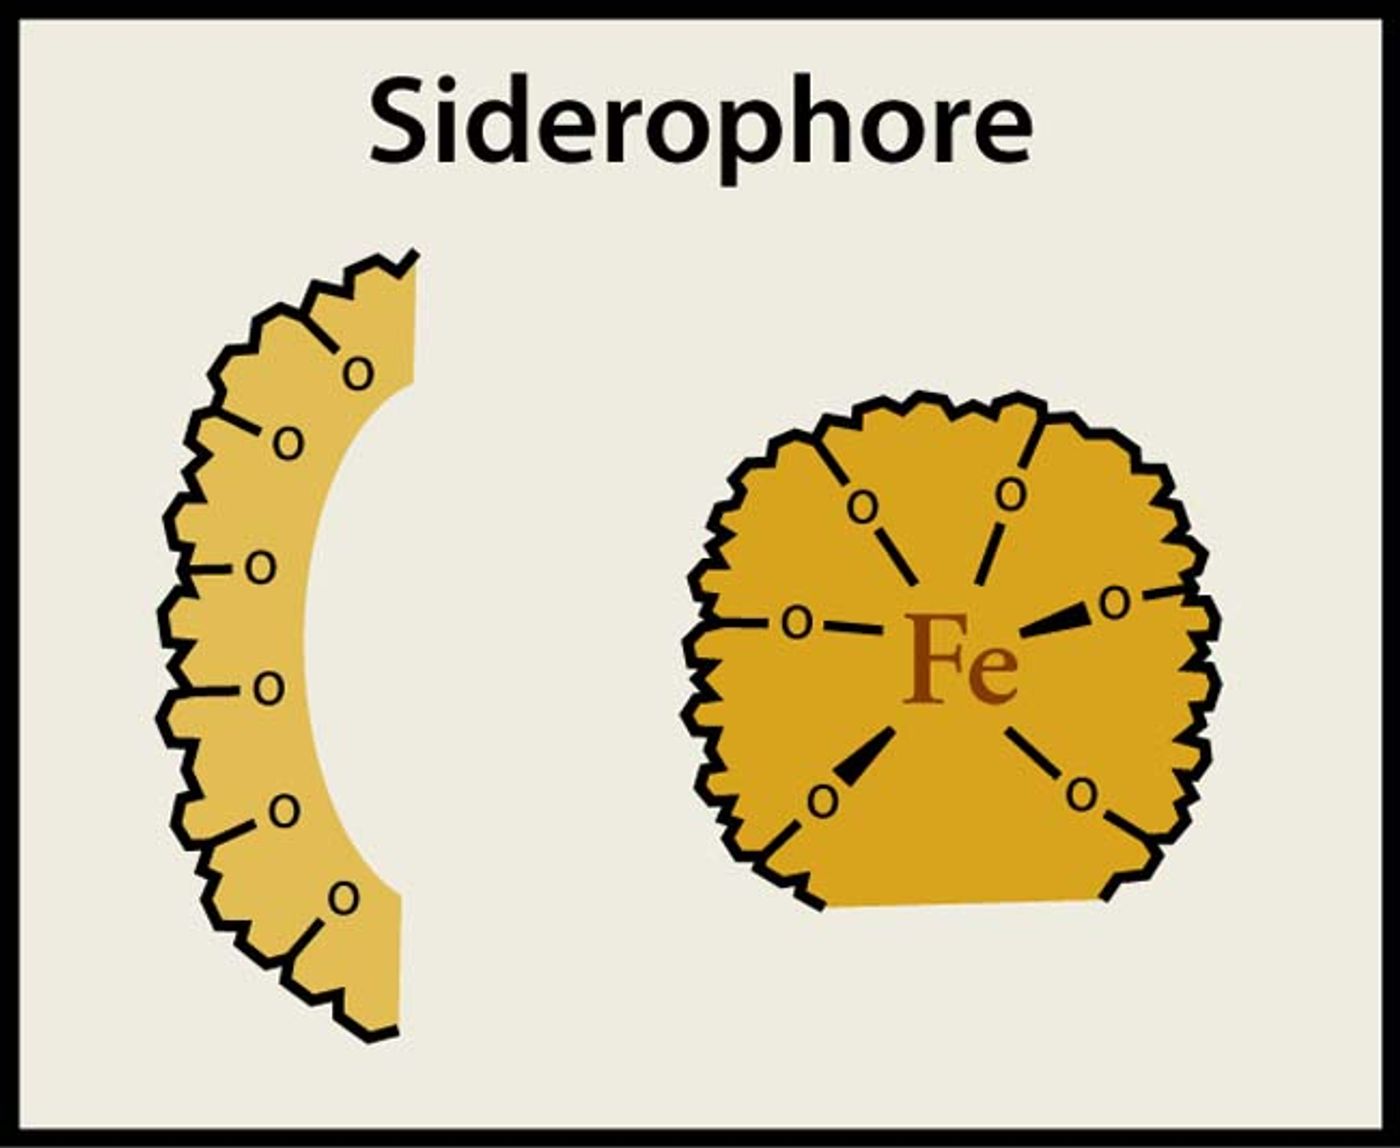 Siderophores bind and transport iron.